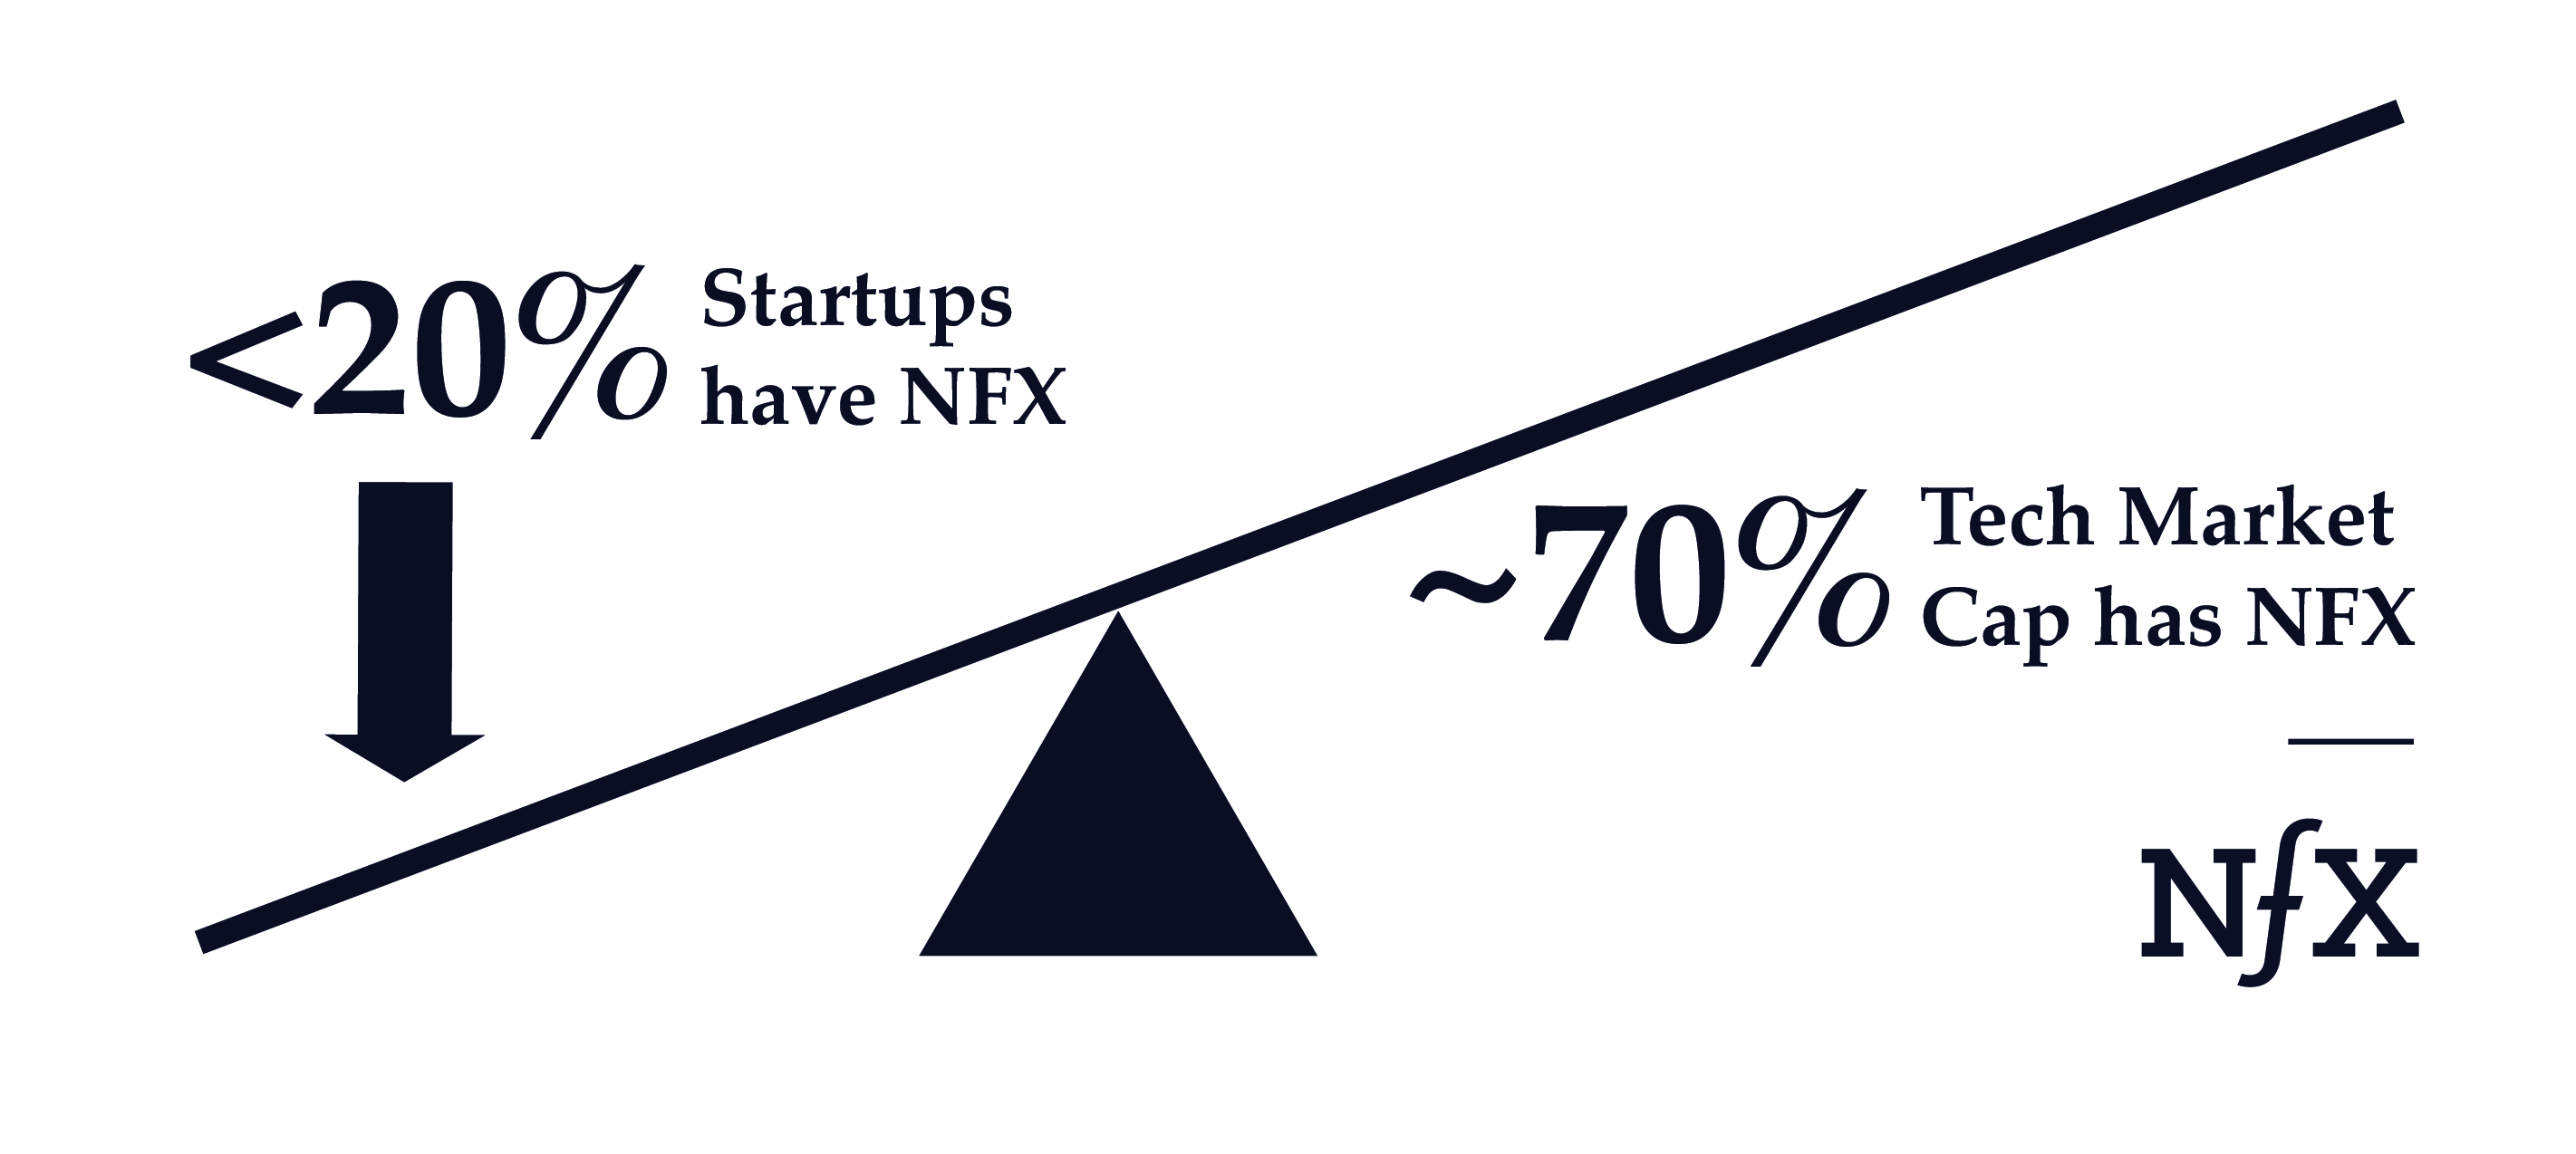 Startups and Tech Market Cap - NFX Essay